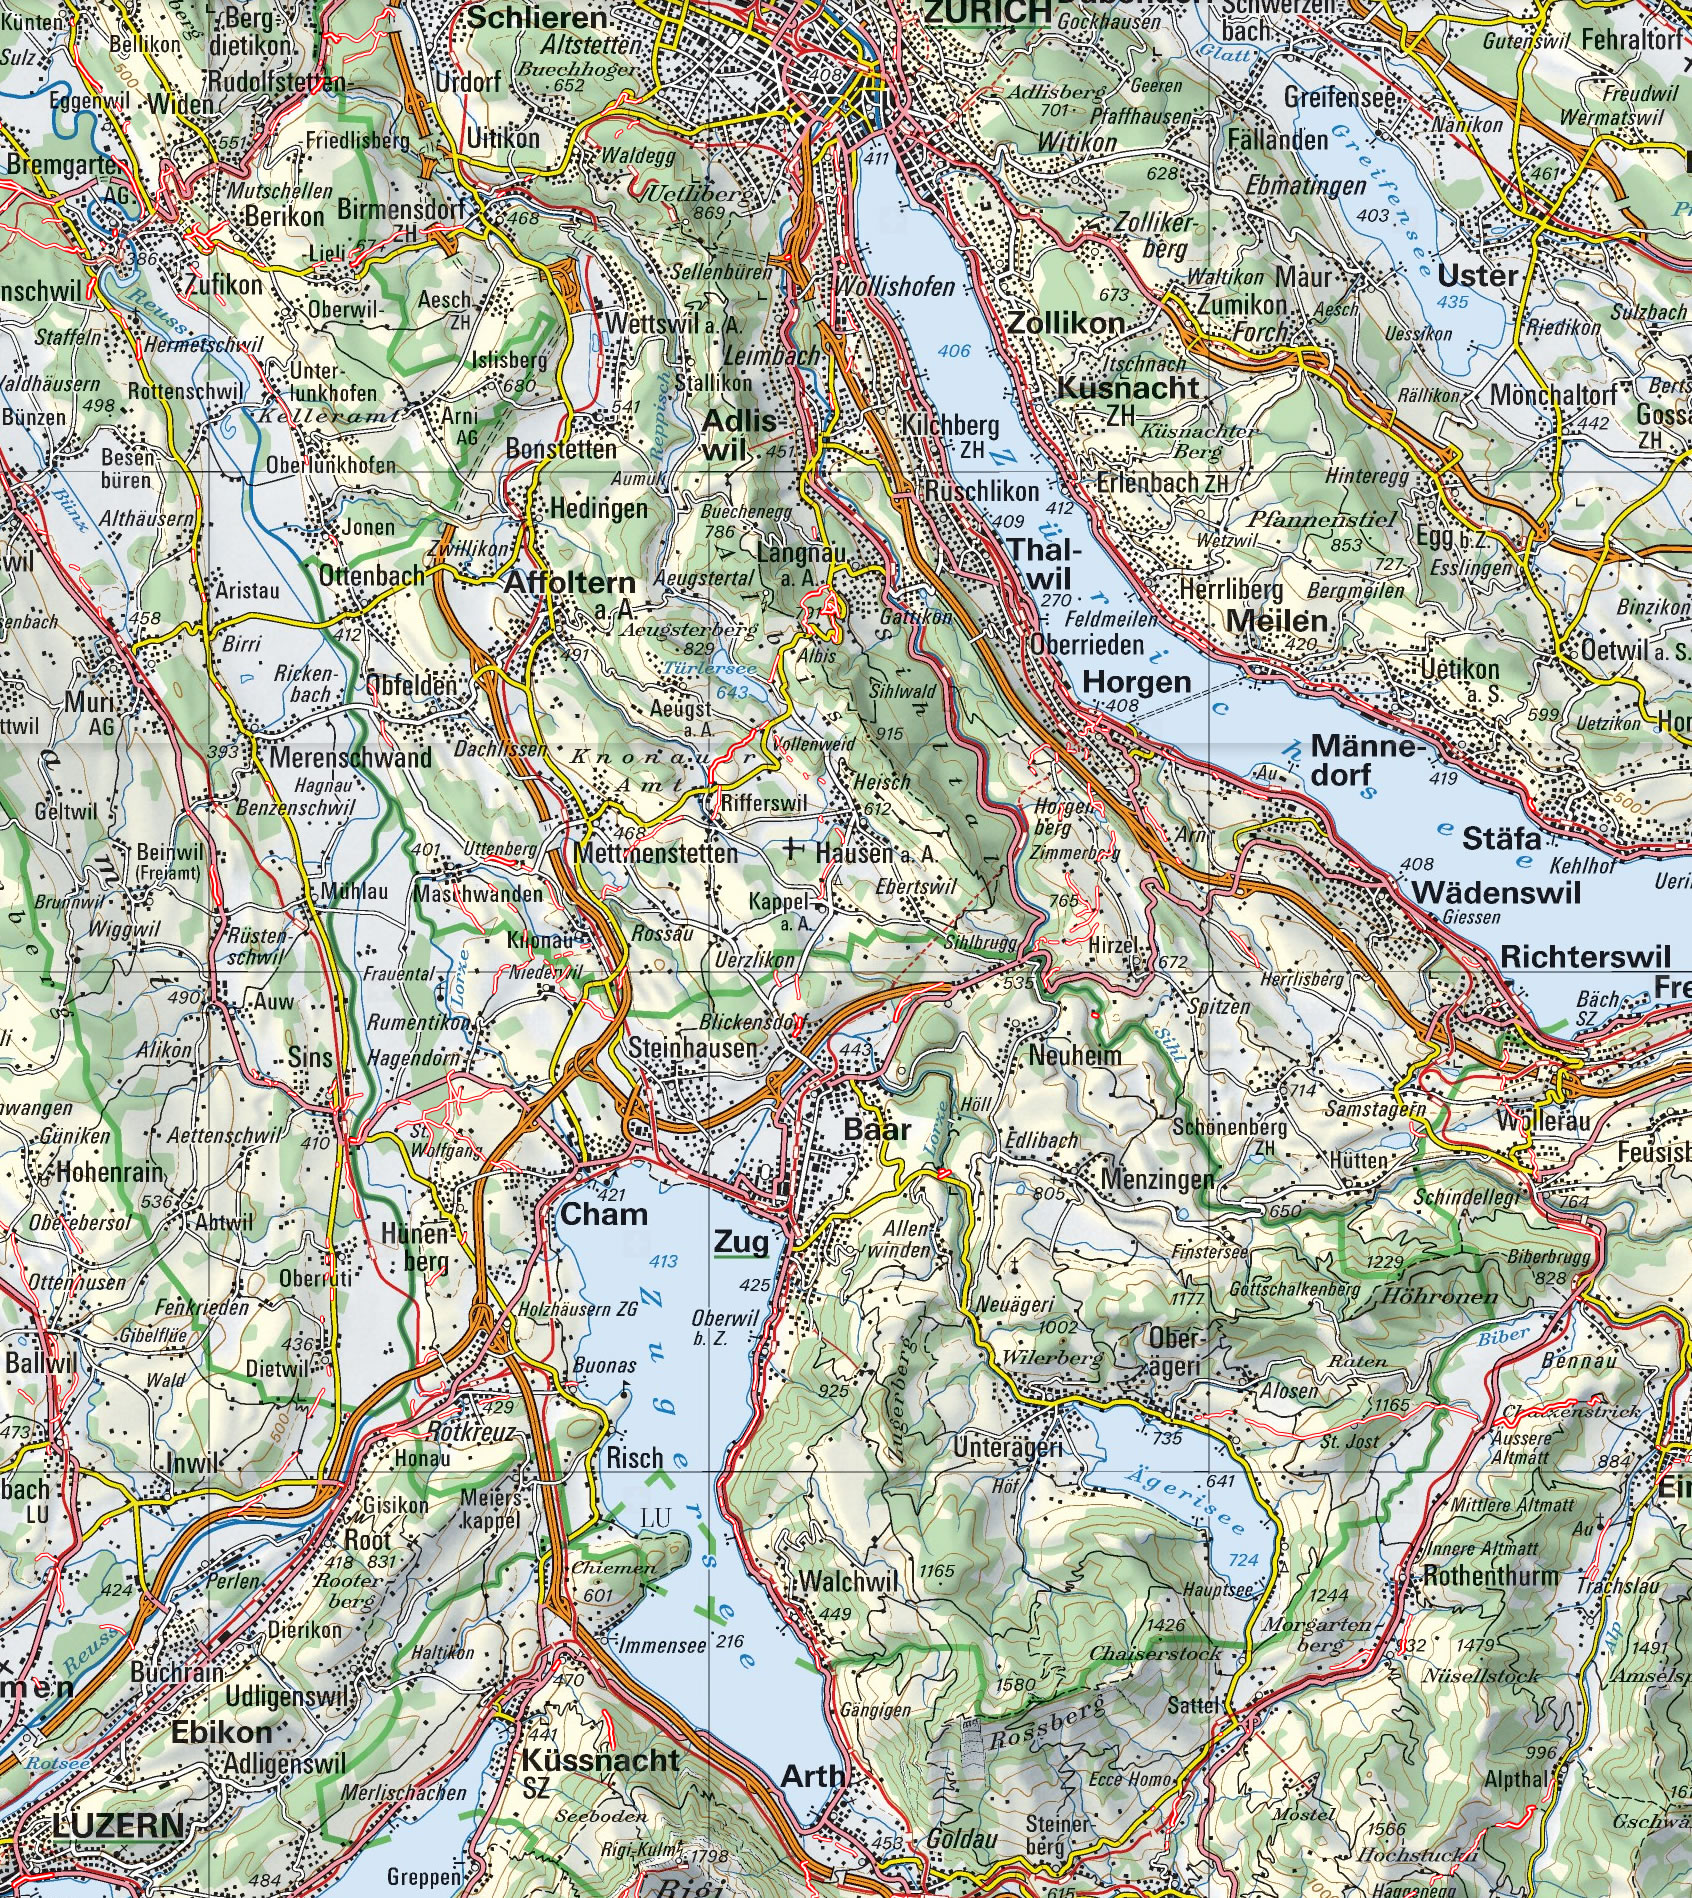 1779. Charlotte: the second Gotthard journey